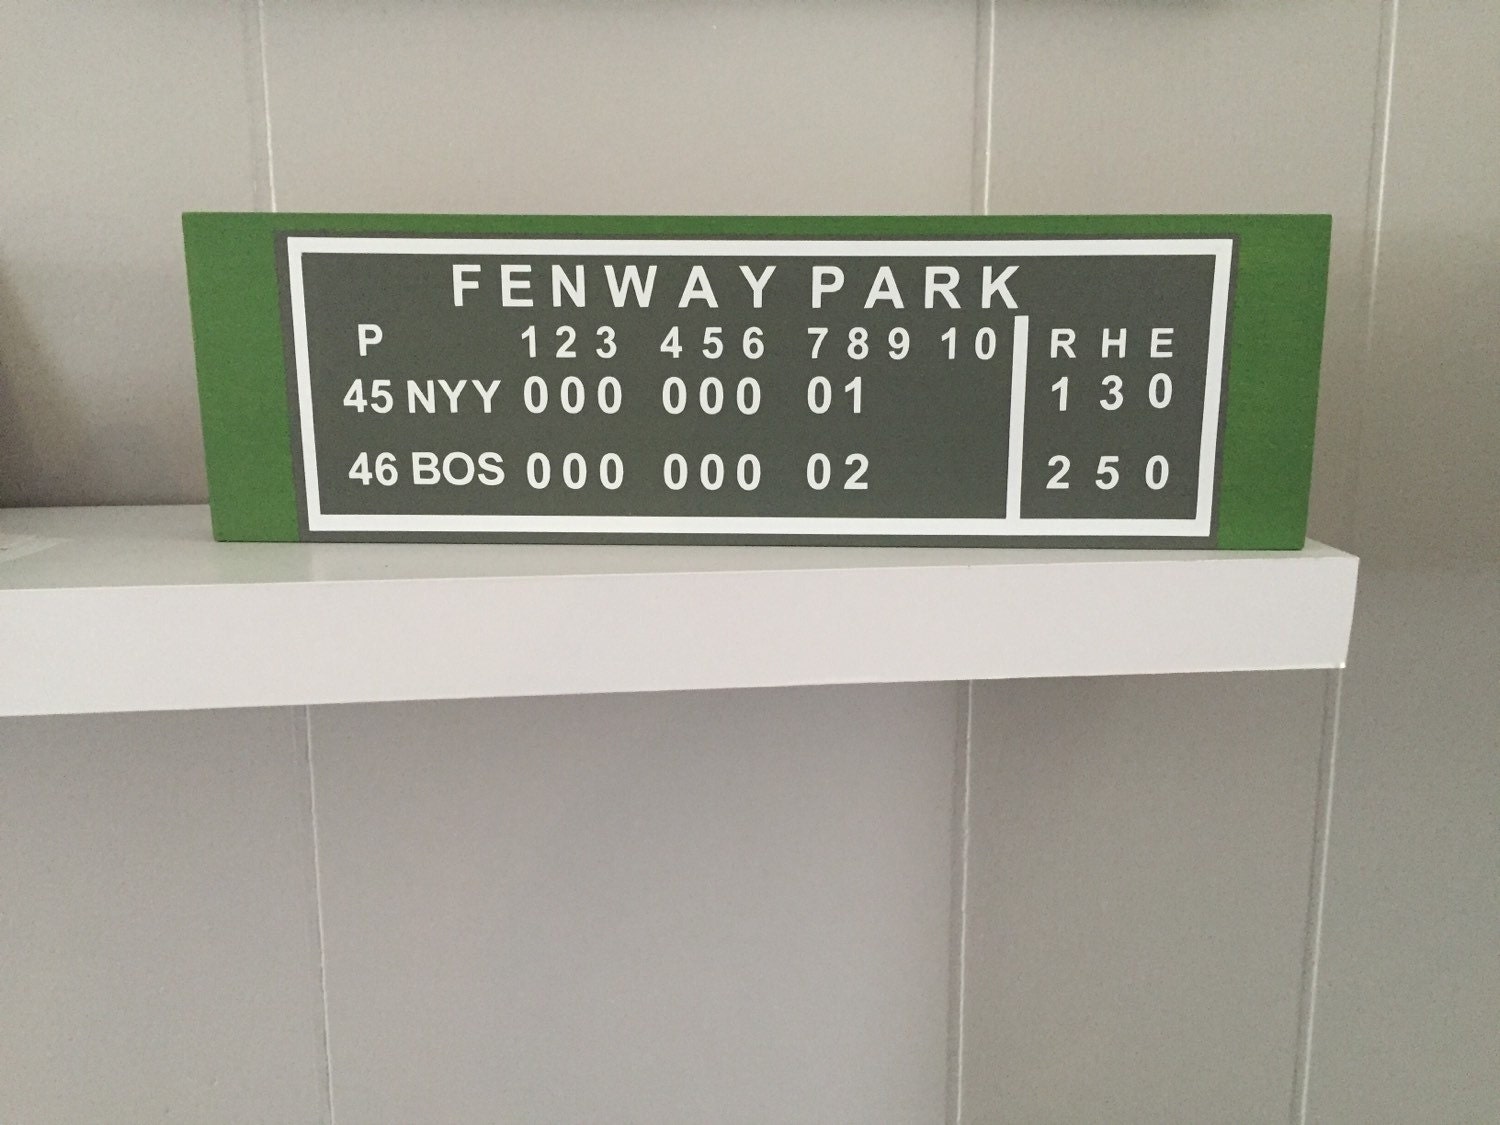 Fenway Park Green Monster Scoreboard Red Sox Yankees